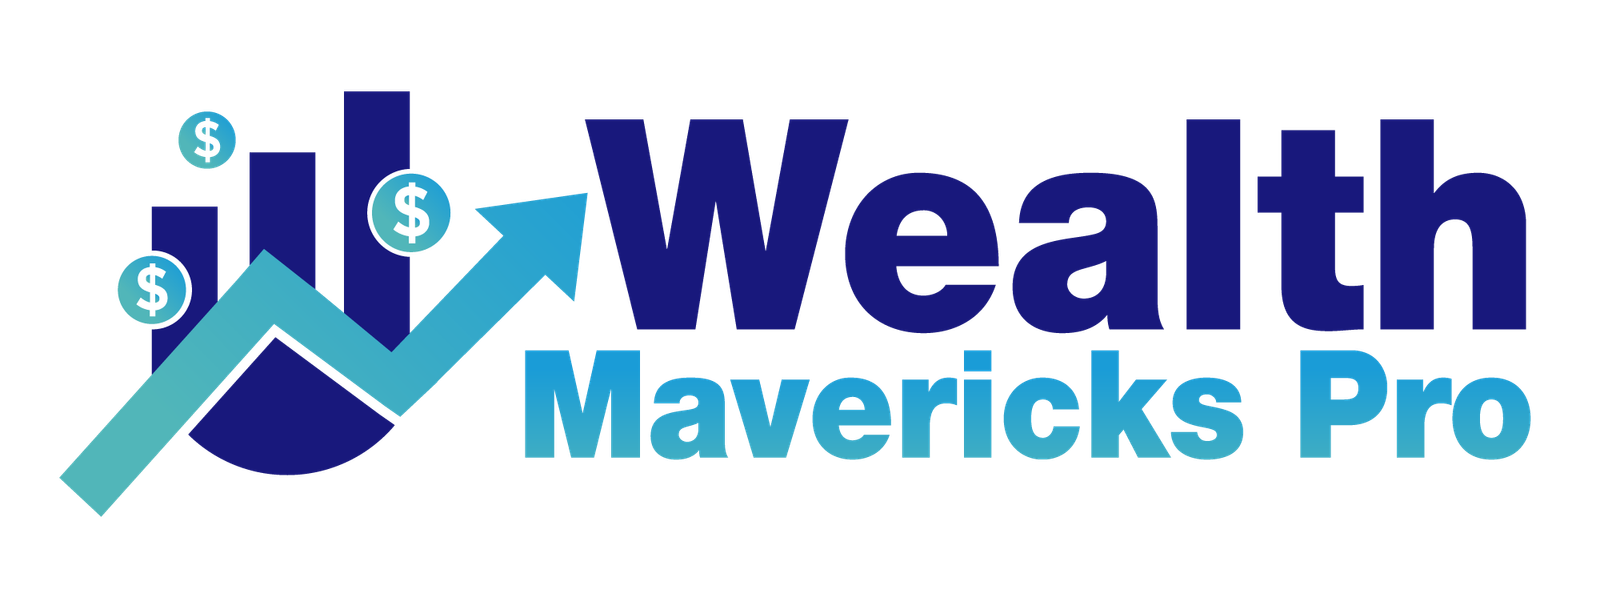 Wealth-Mavericks-Pro-v1 logo